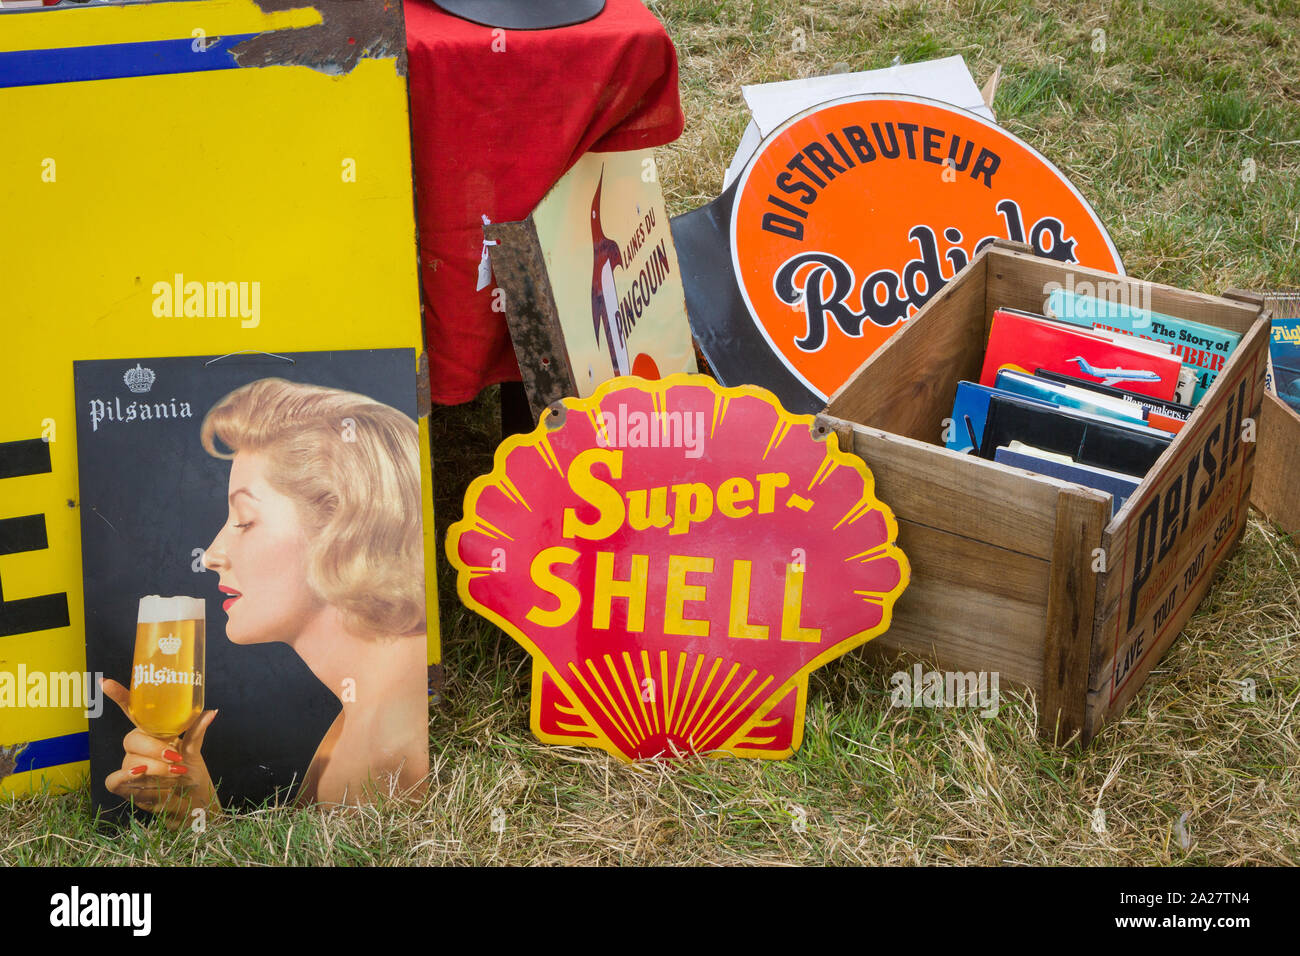 A Super Shell enamel sign for sale amongst classic car automobilia Stock Photo